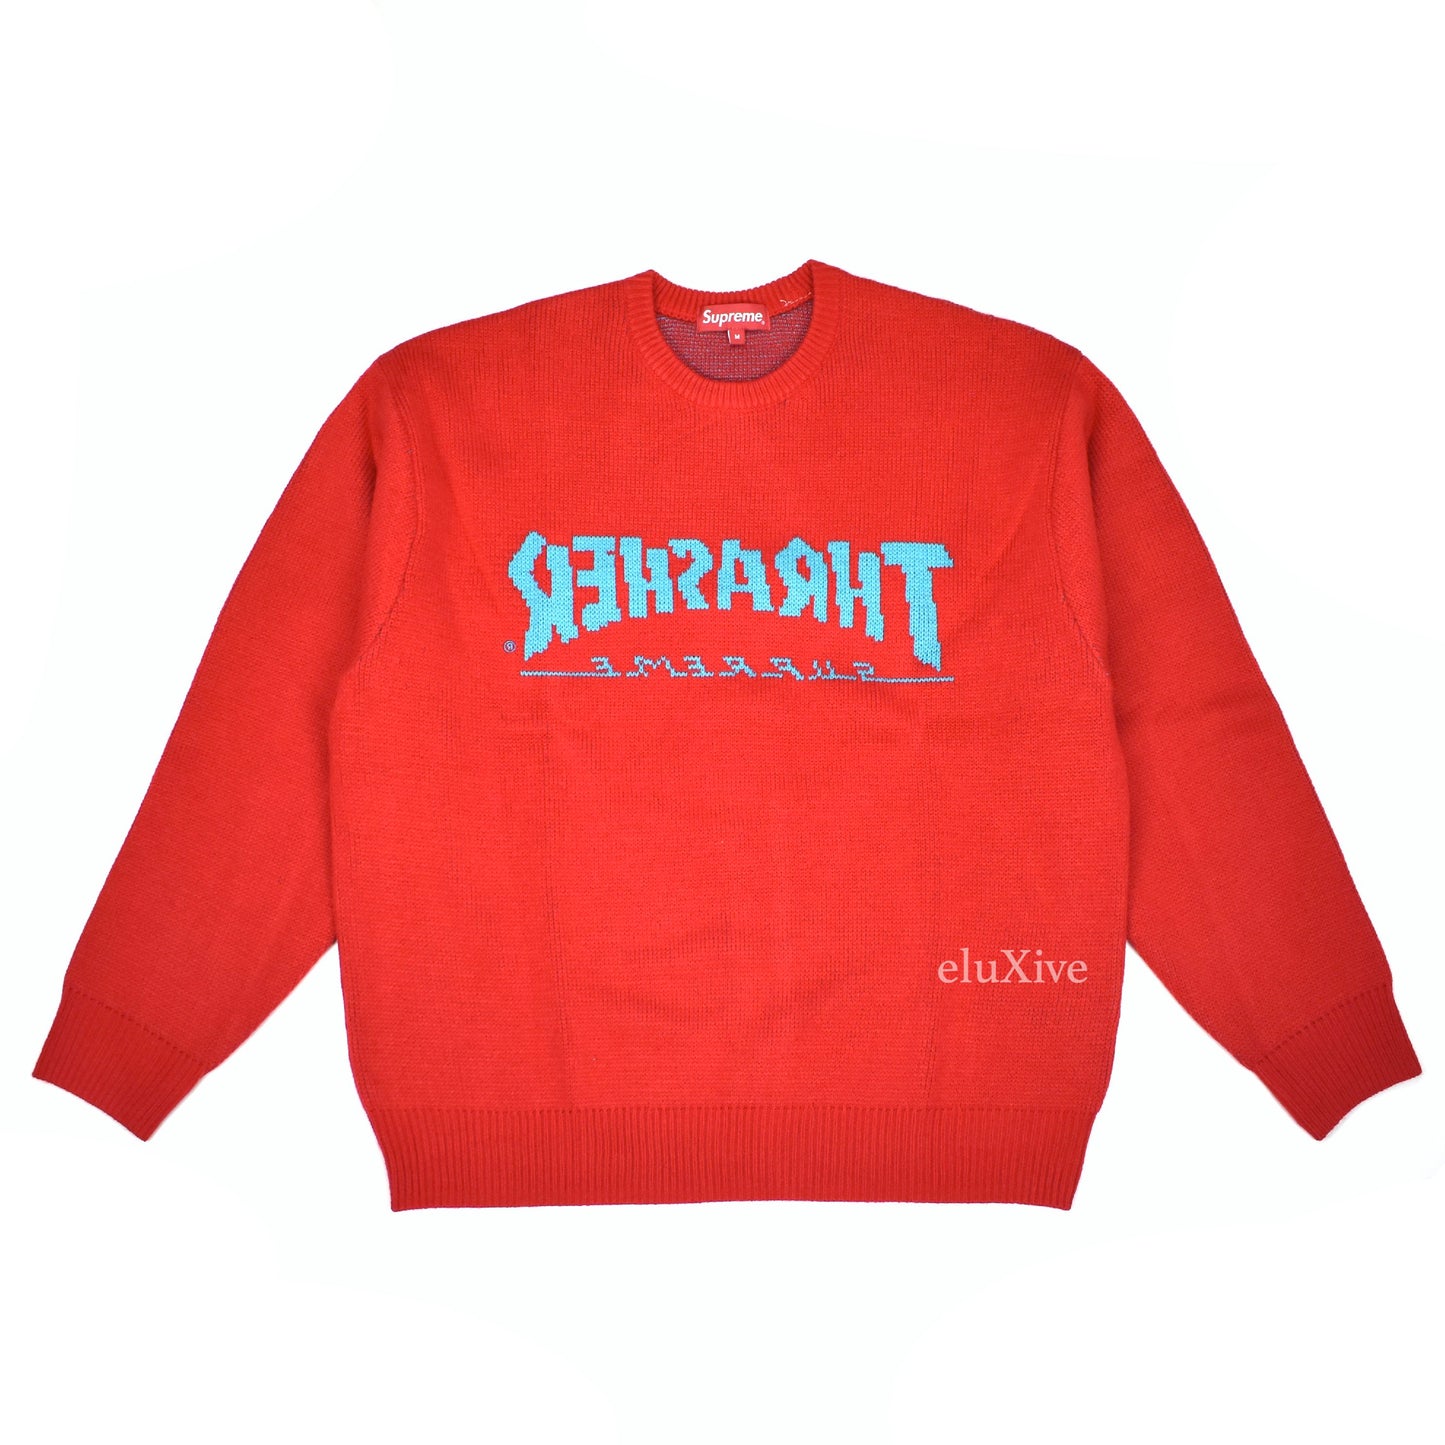 Supreme x Thrasher - Red Jacquard Knit Logo Sweater